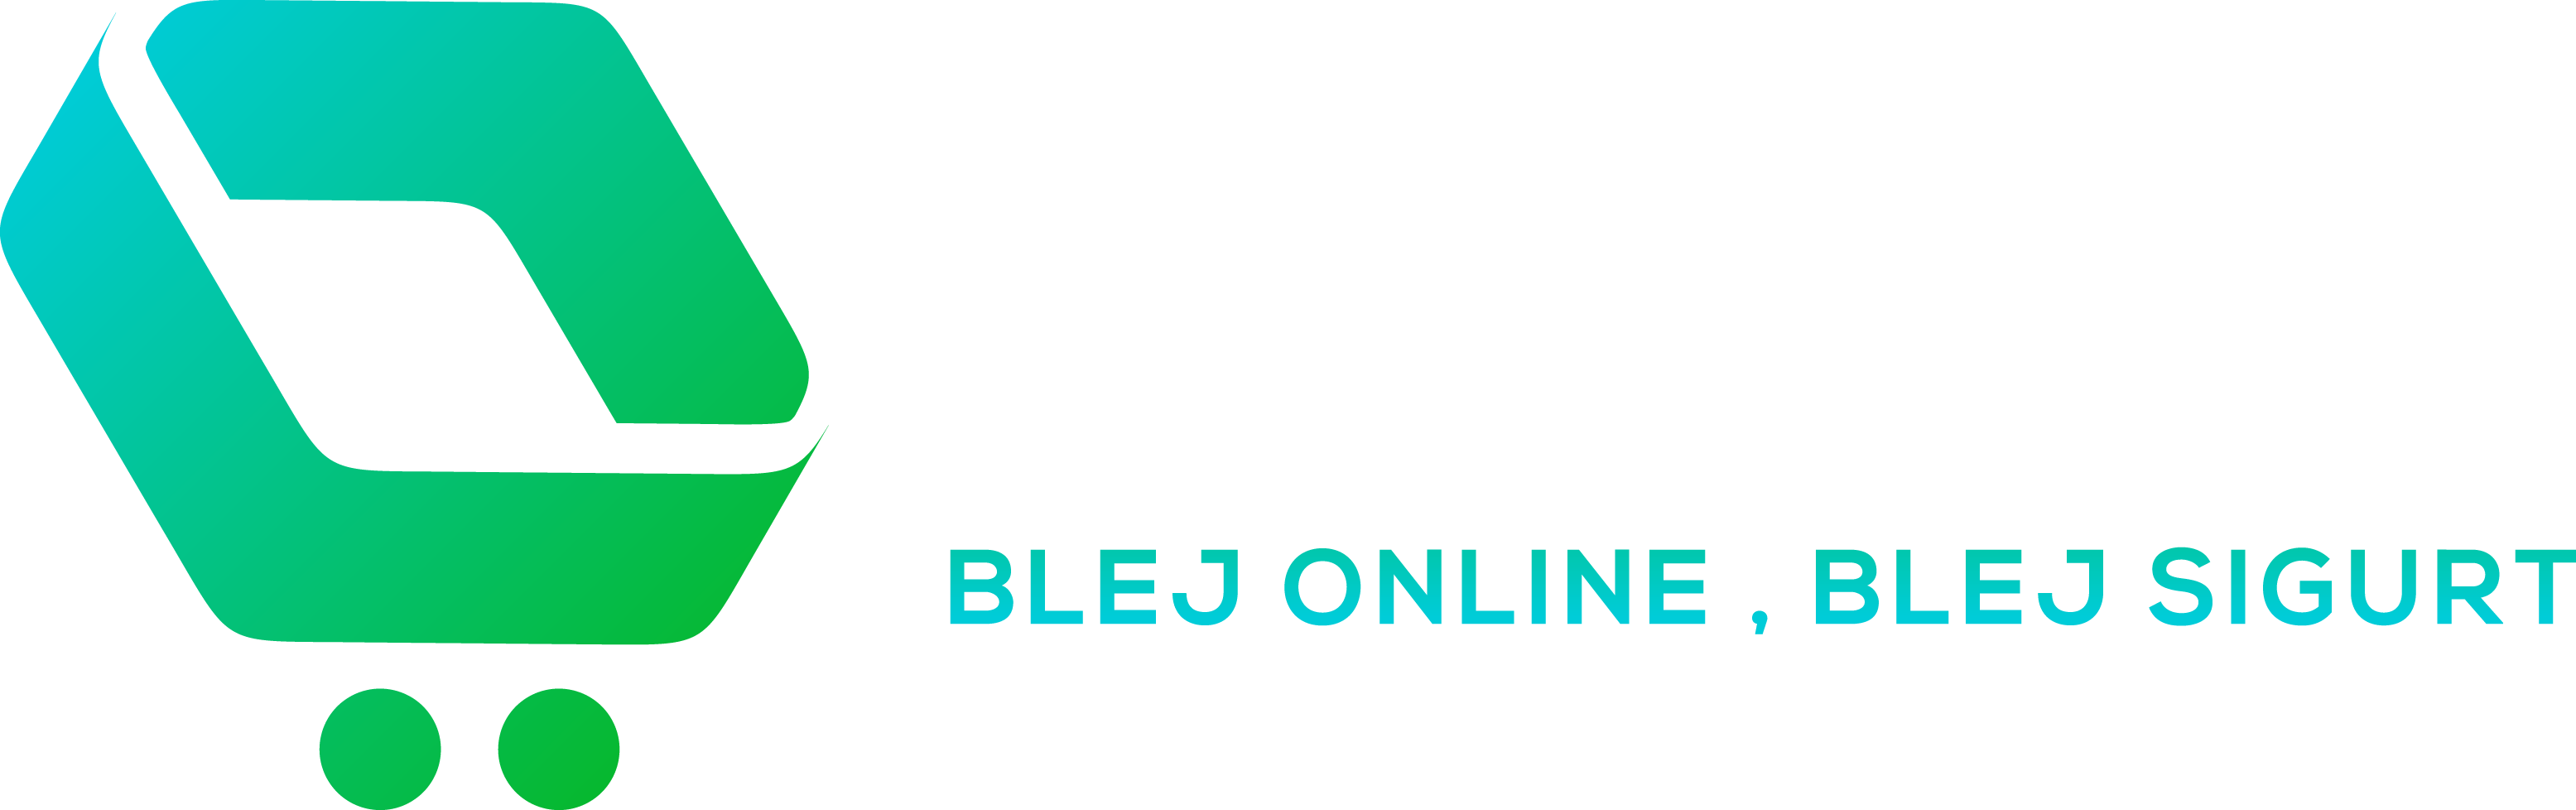 Kubik Electronics